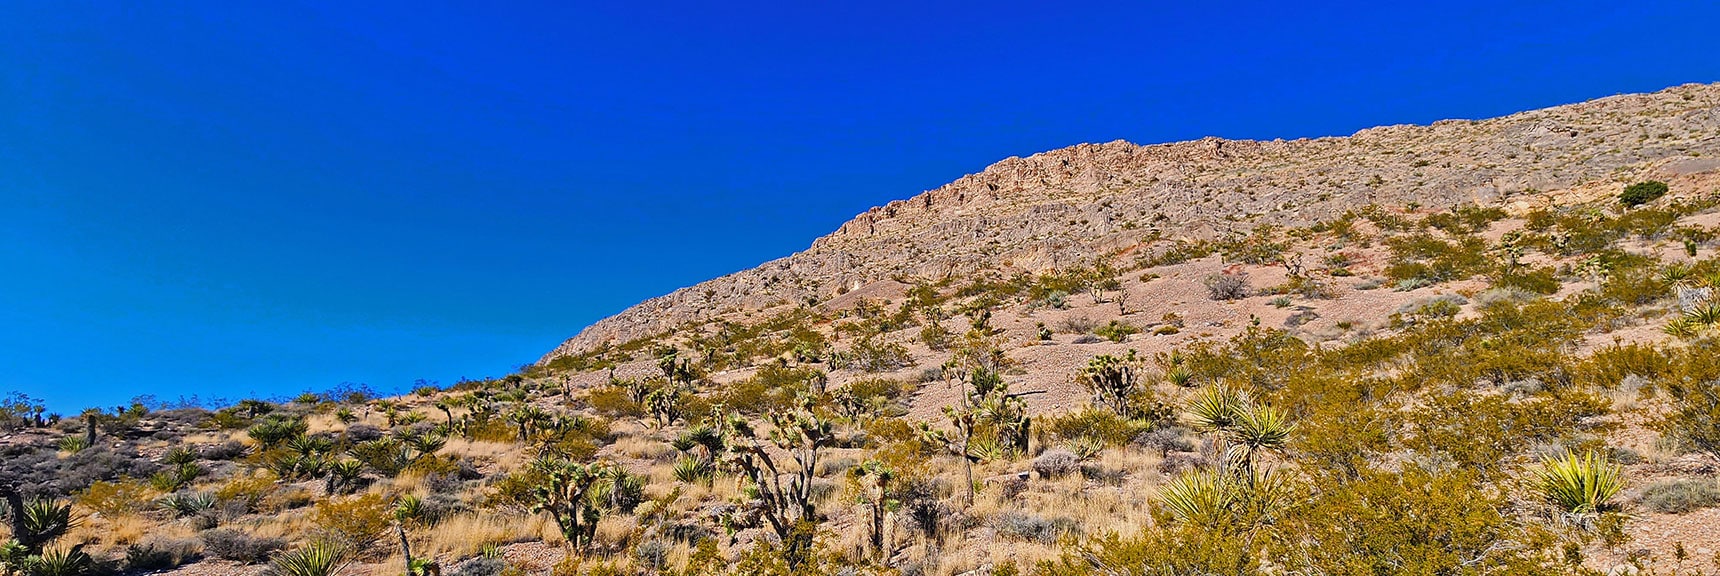 Nearing the Southeast Edge of Landmark Bluff | Landmark Bluff | Lovell Canyon, Nevada